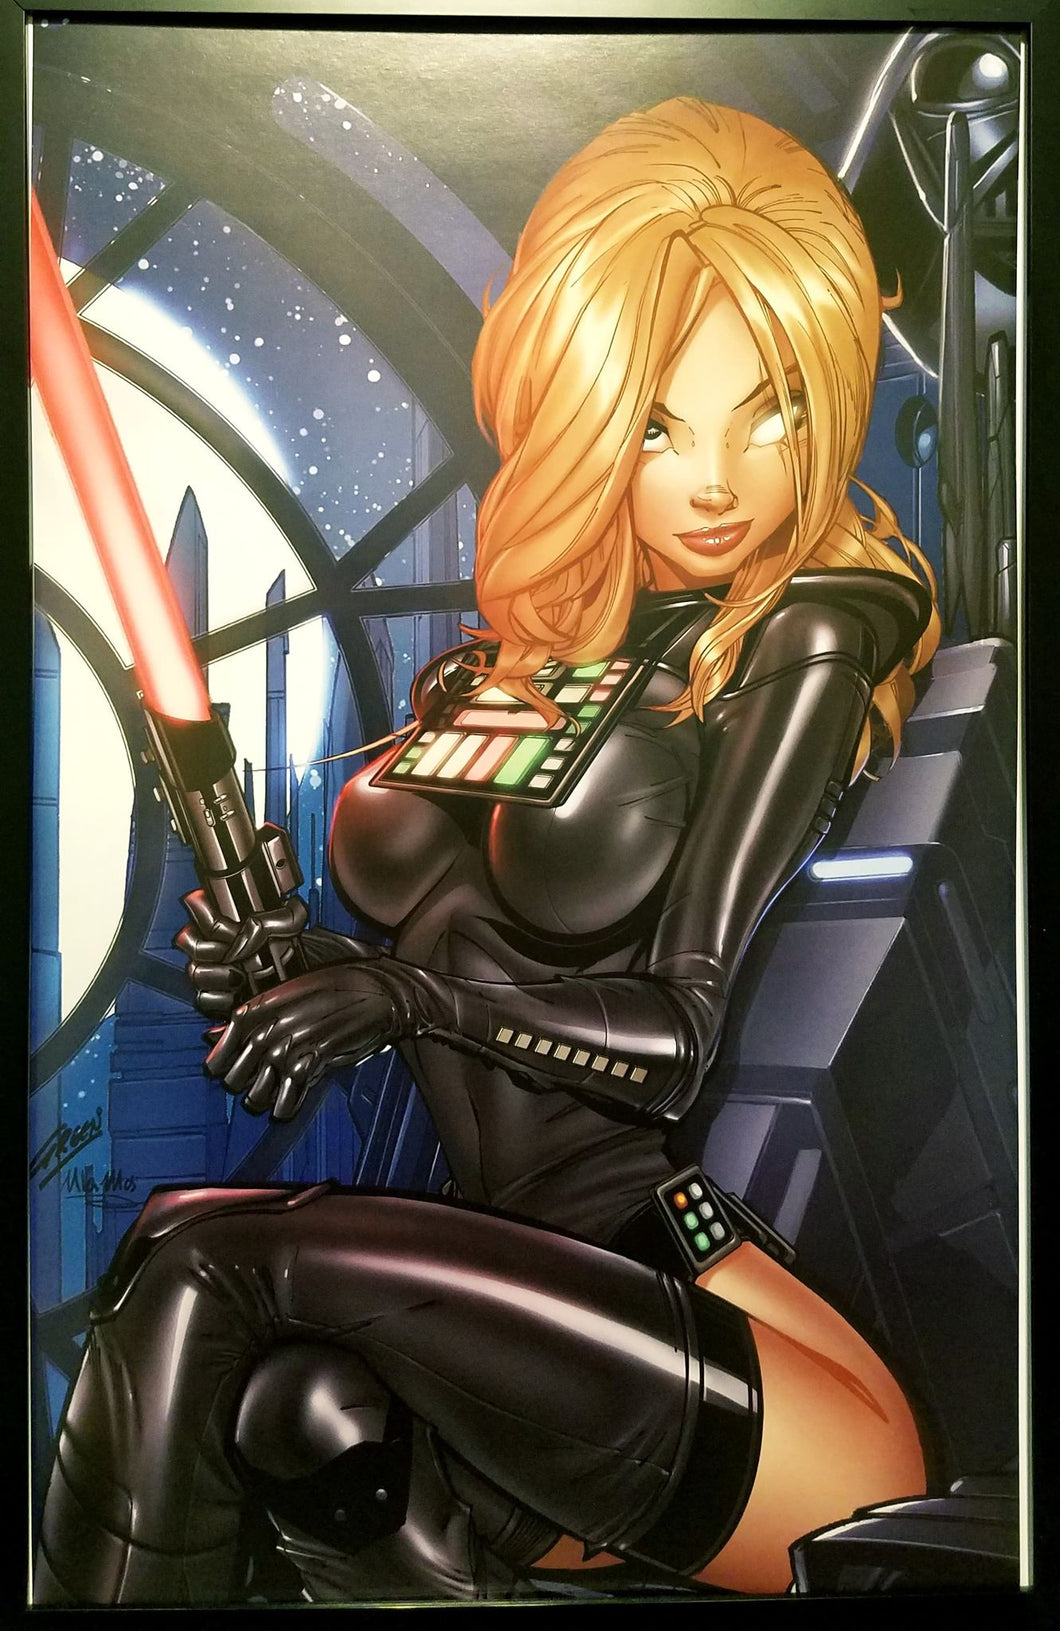 Star Wars Darth Vader Cosplay by Paul Green 11x17 FRAMED Art Print, Zenescope Comics